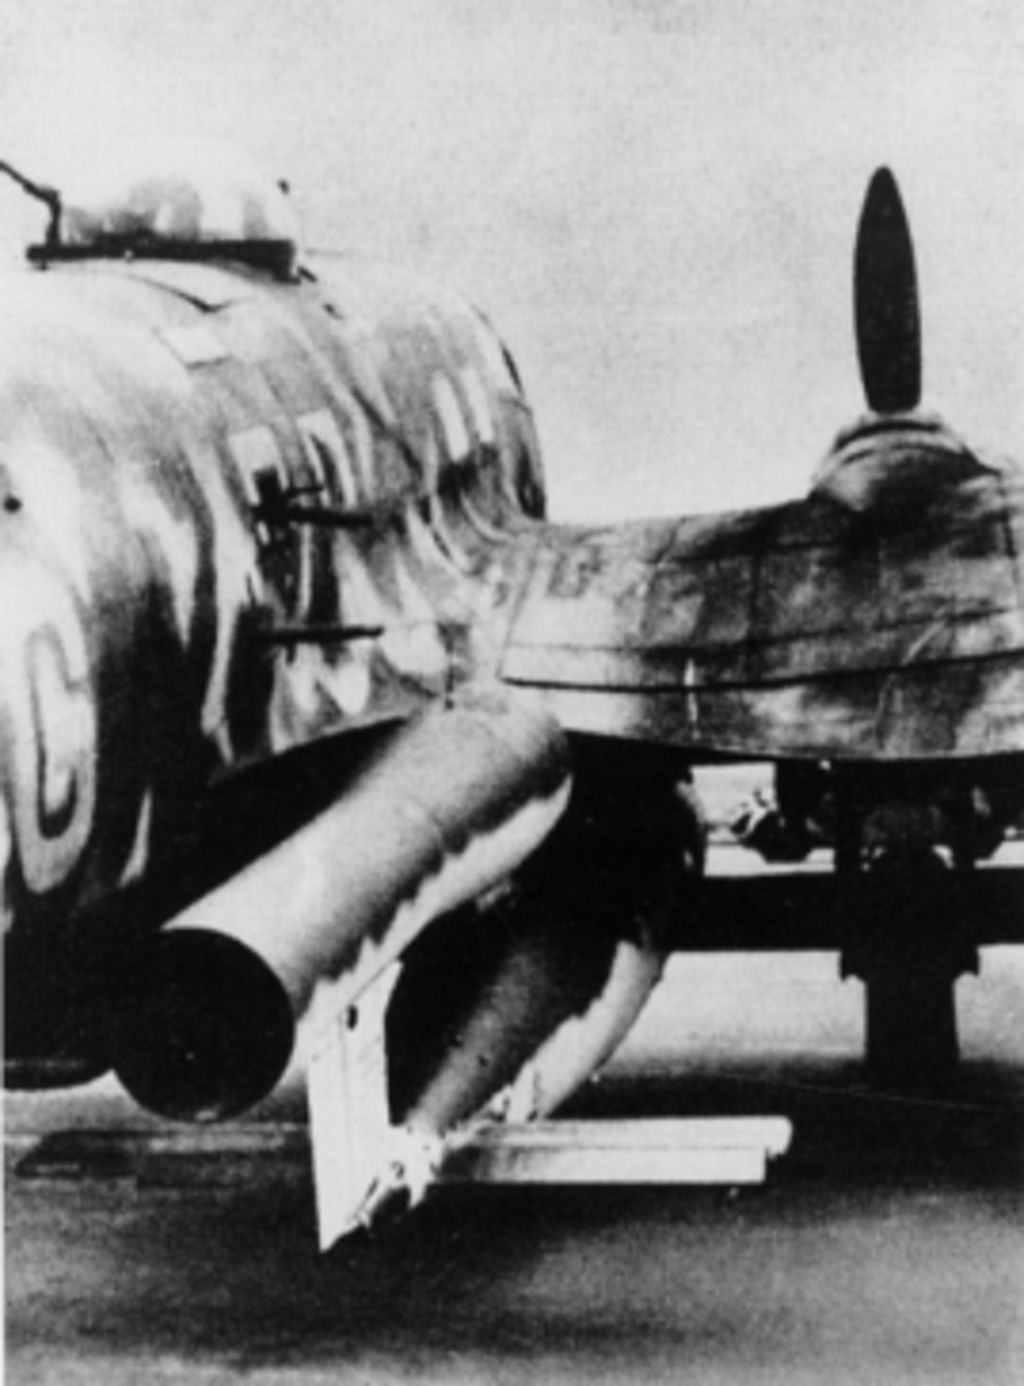 Exponat: Foto: Trägerflugzeug mit V1-Flugbombe, 1944/45